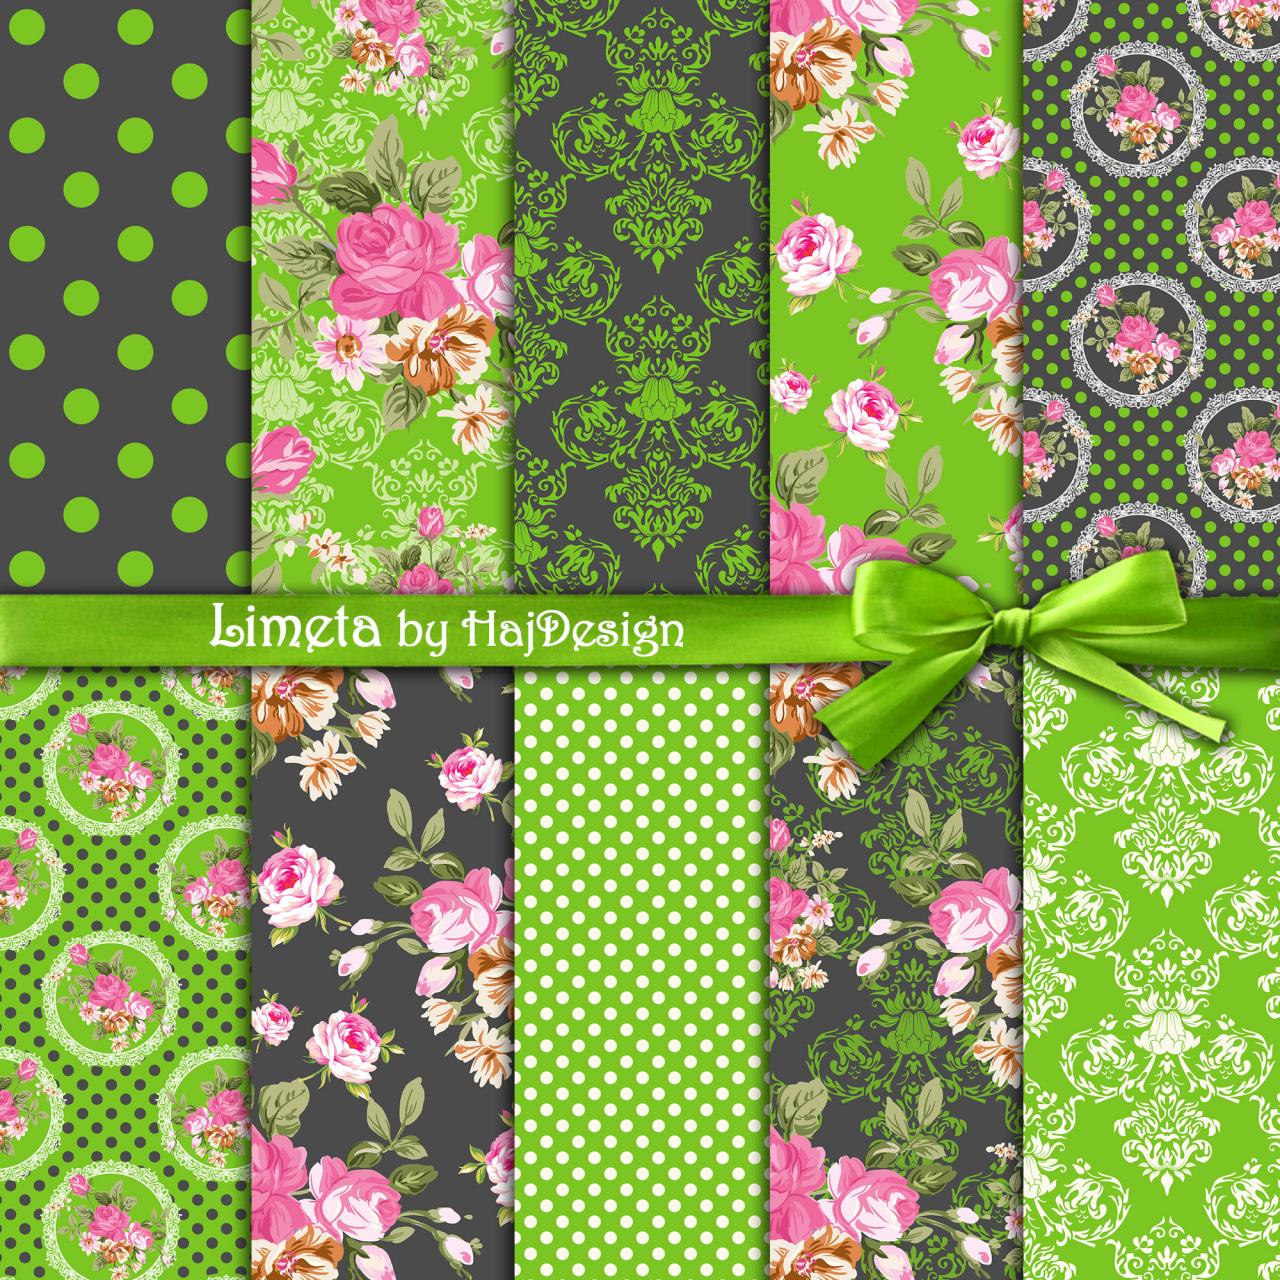 Limeta - Digital Collage Sheet - Digital Paper - Decoupage Paper - Scrapbook Paper - Shabby Chic - Floral Paper - Green